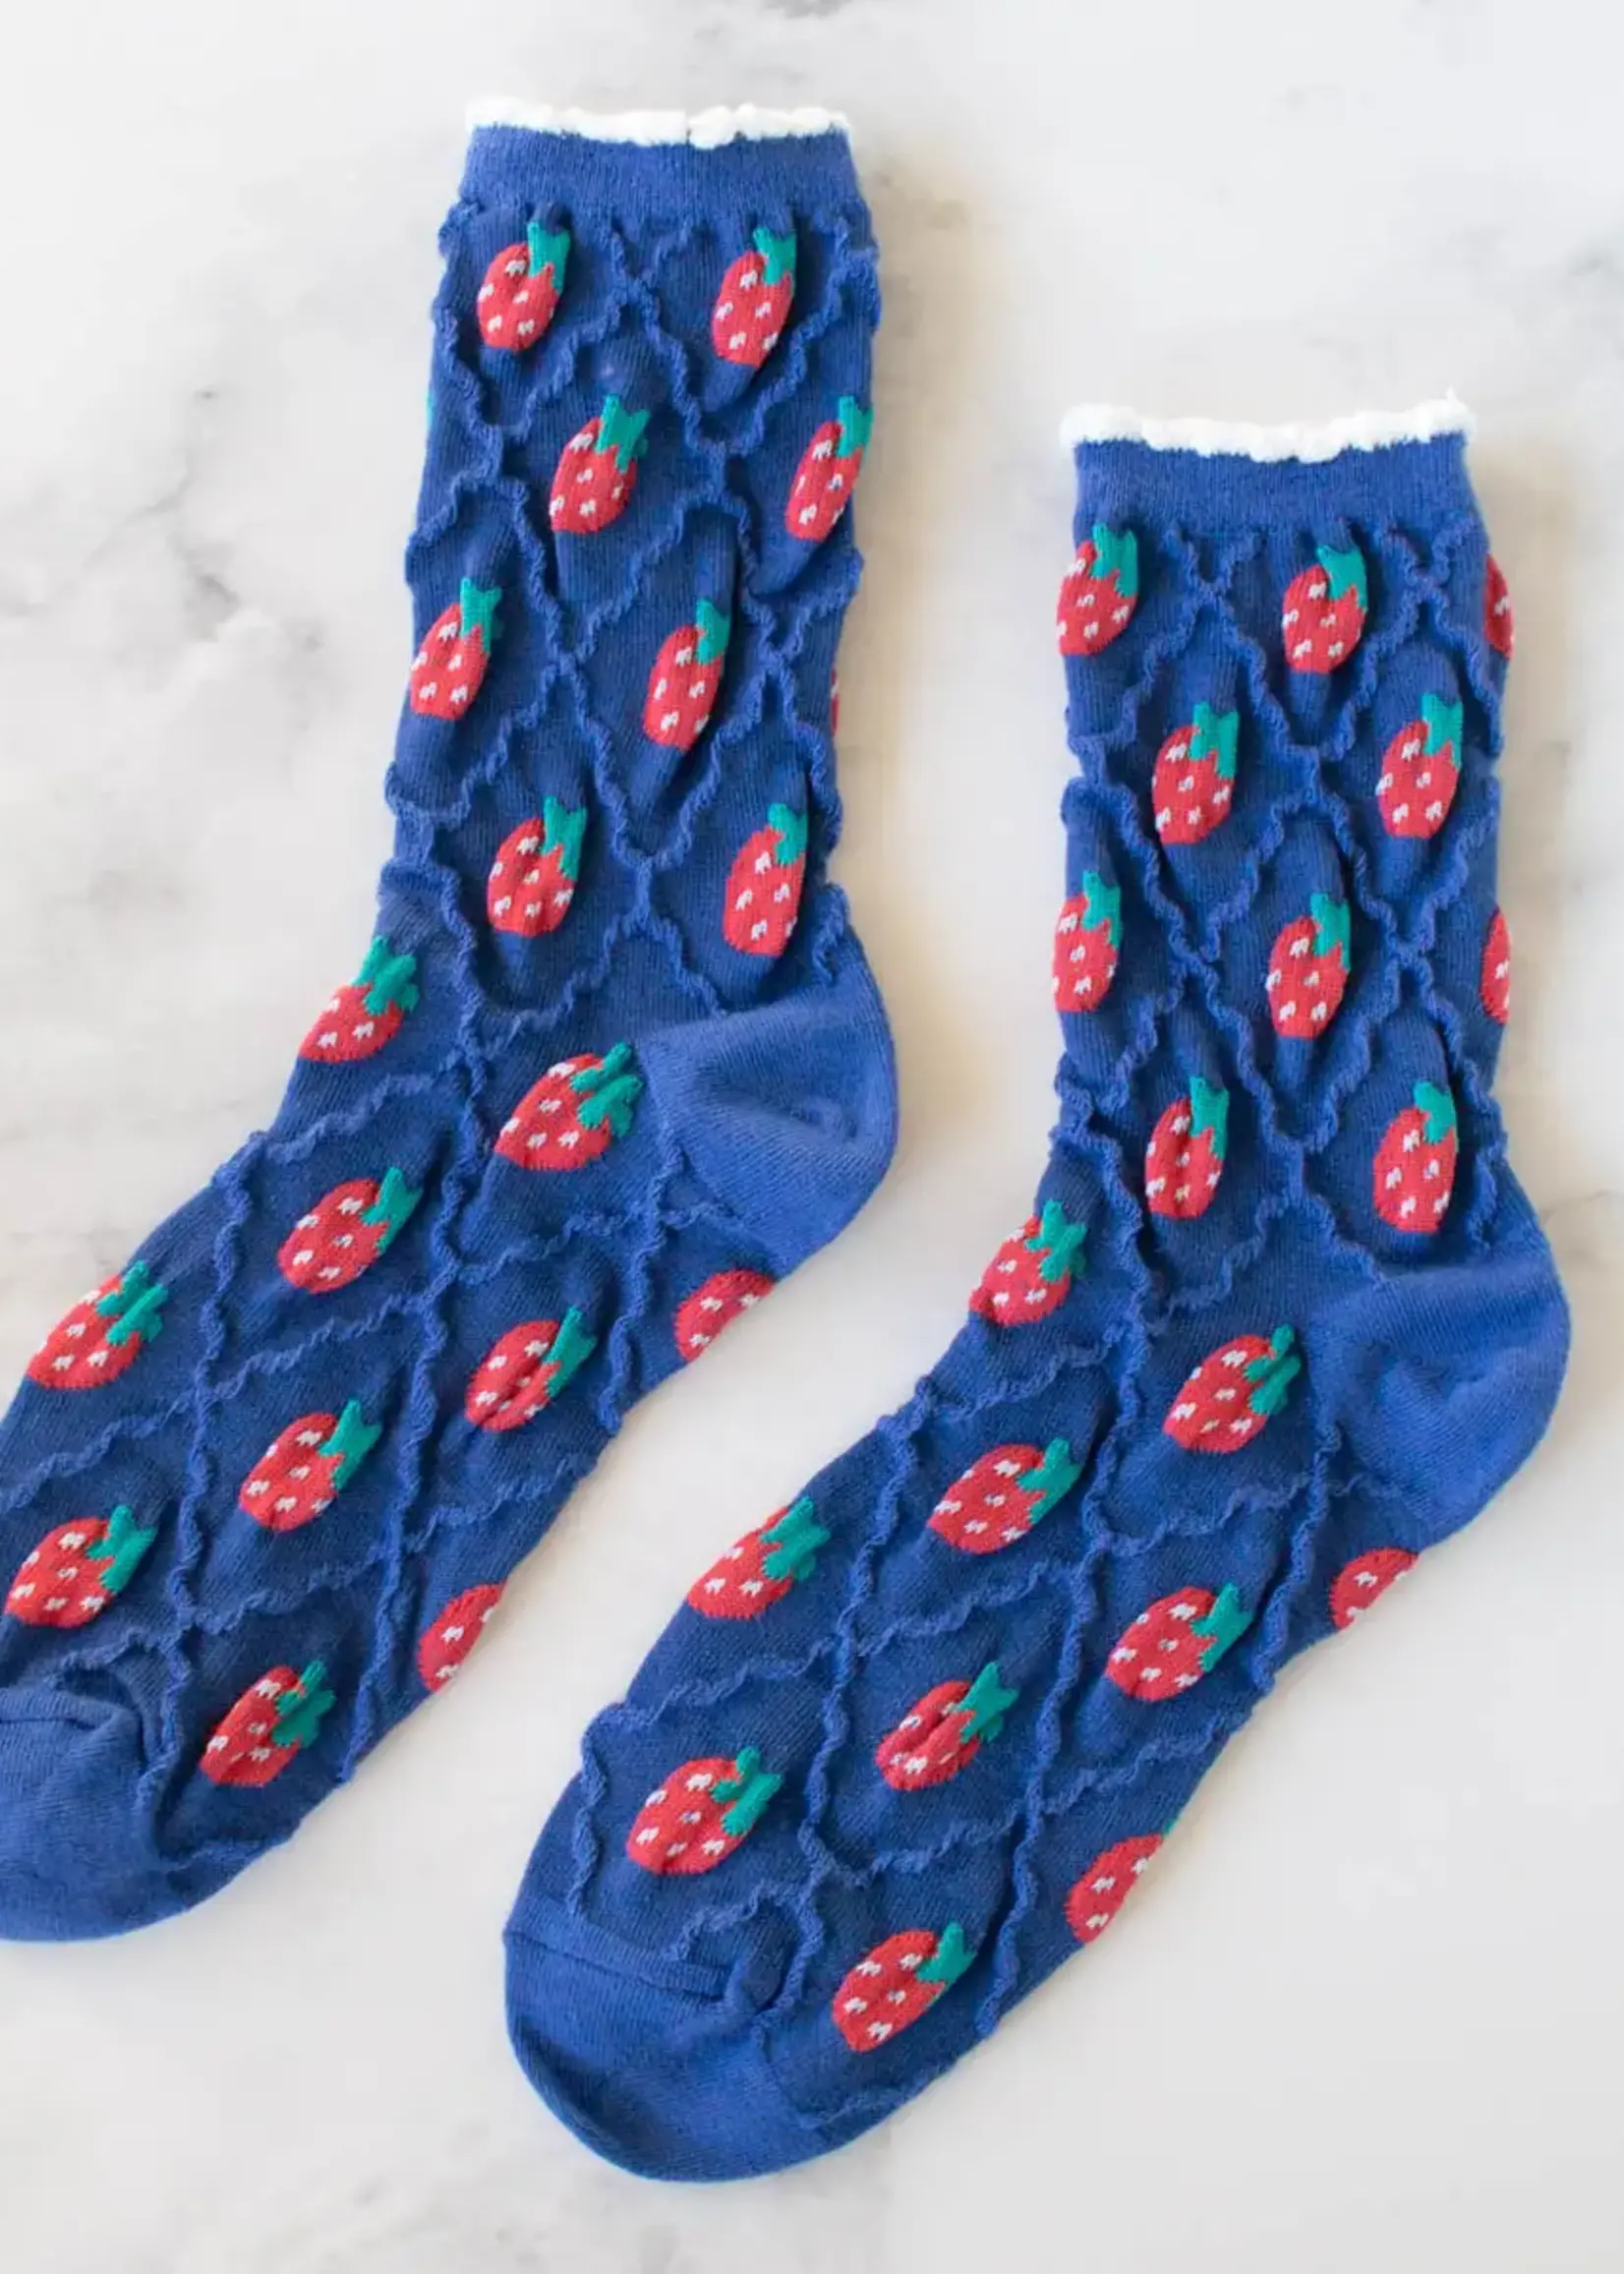 Tiepology Retro Strawberry Casual Socks in Blue/Strawberry